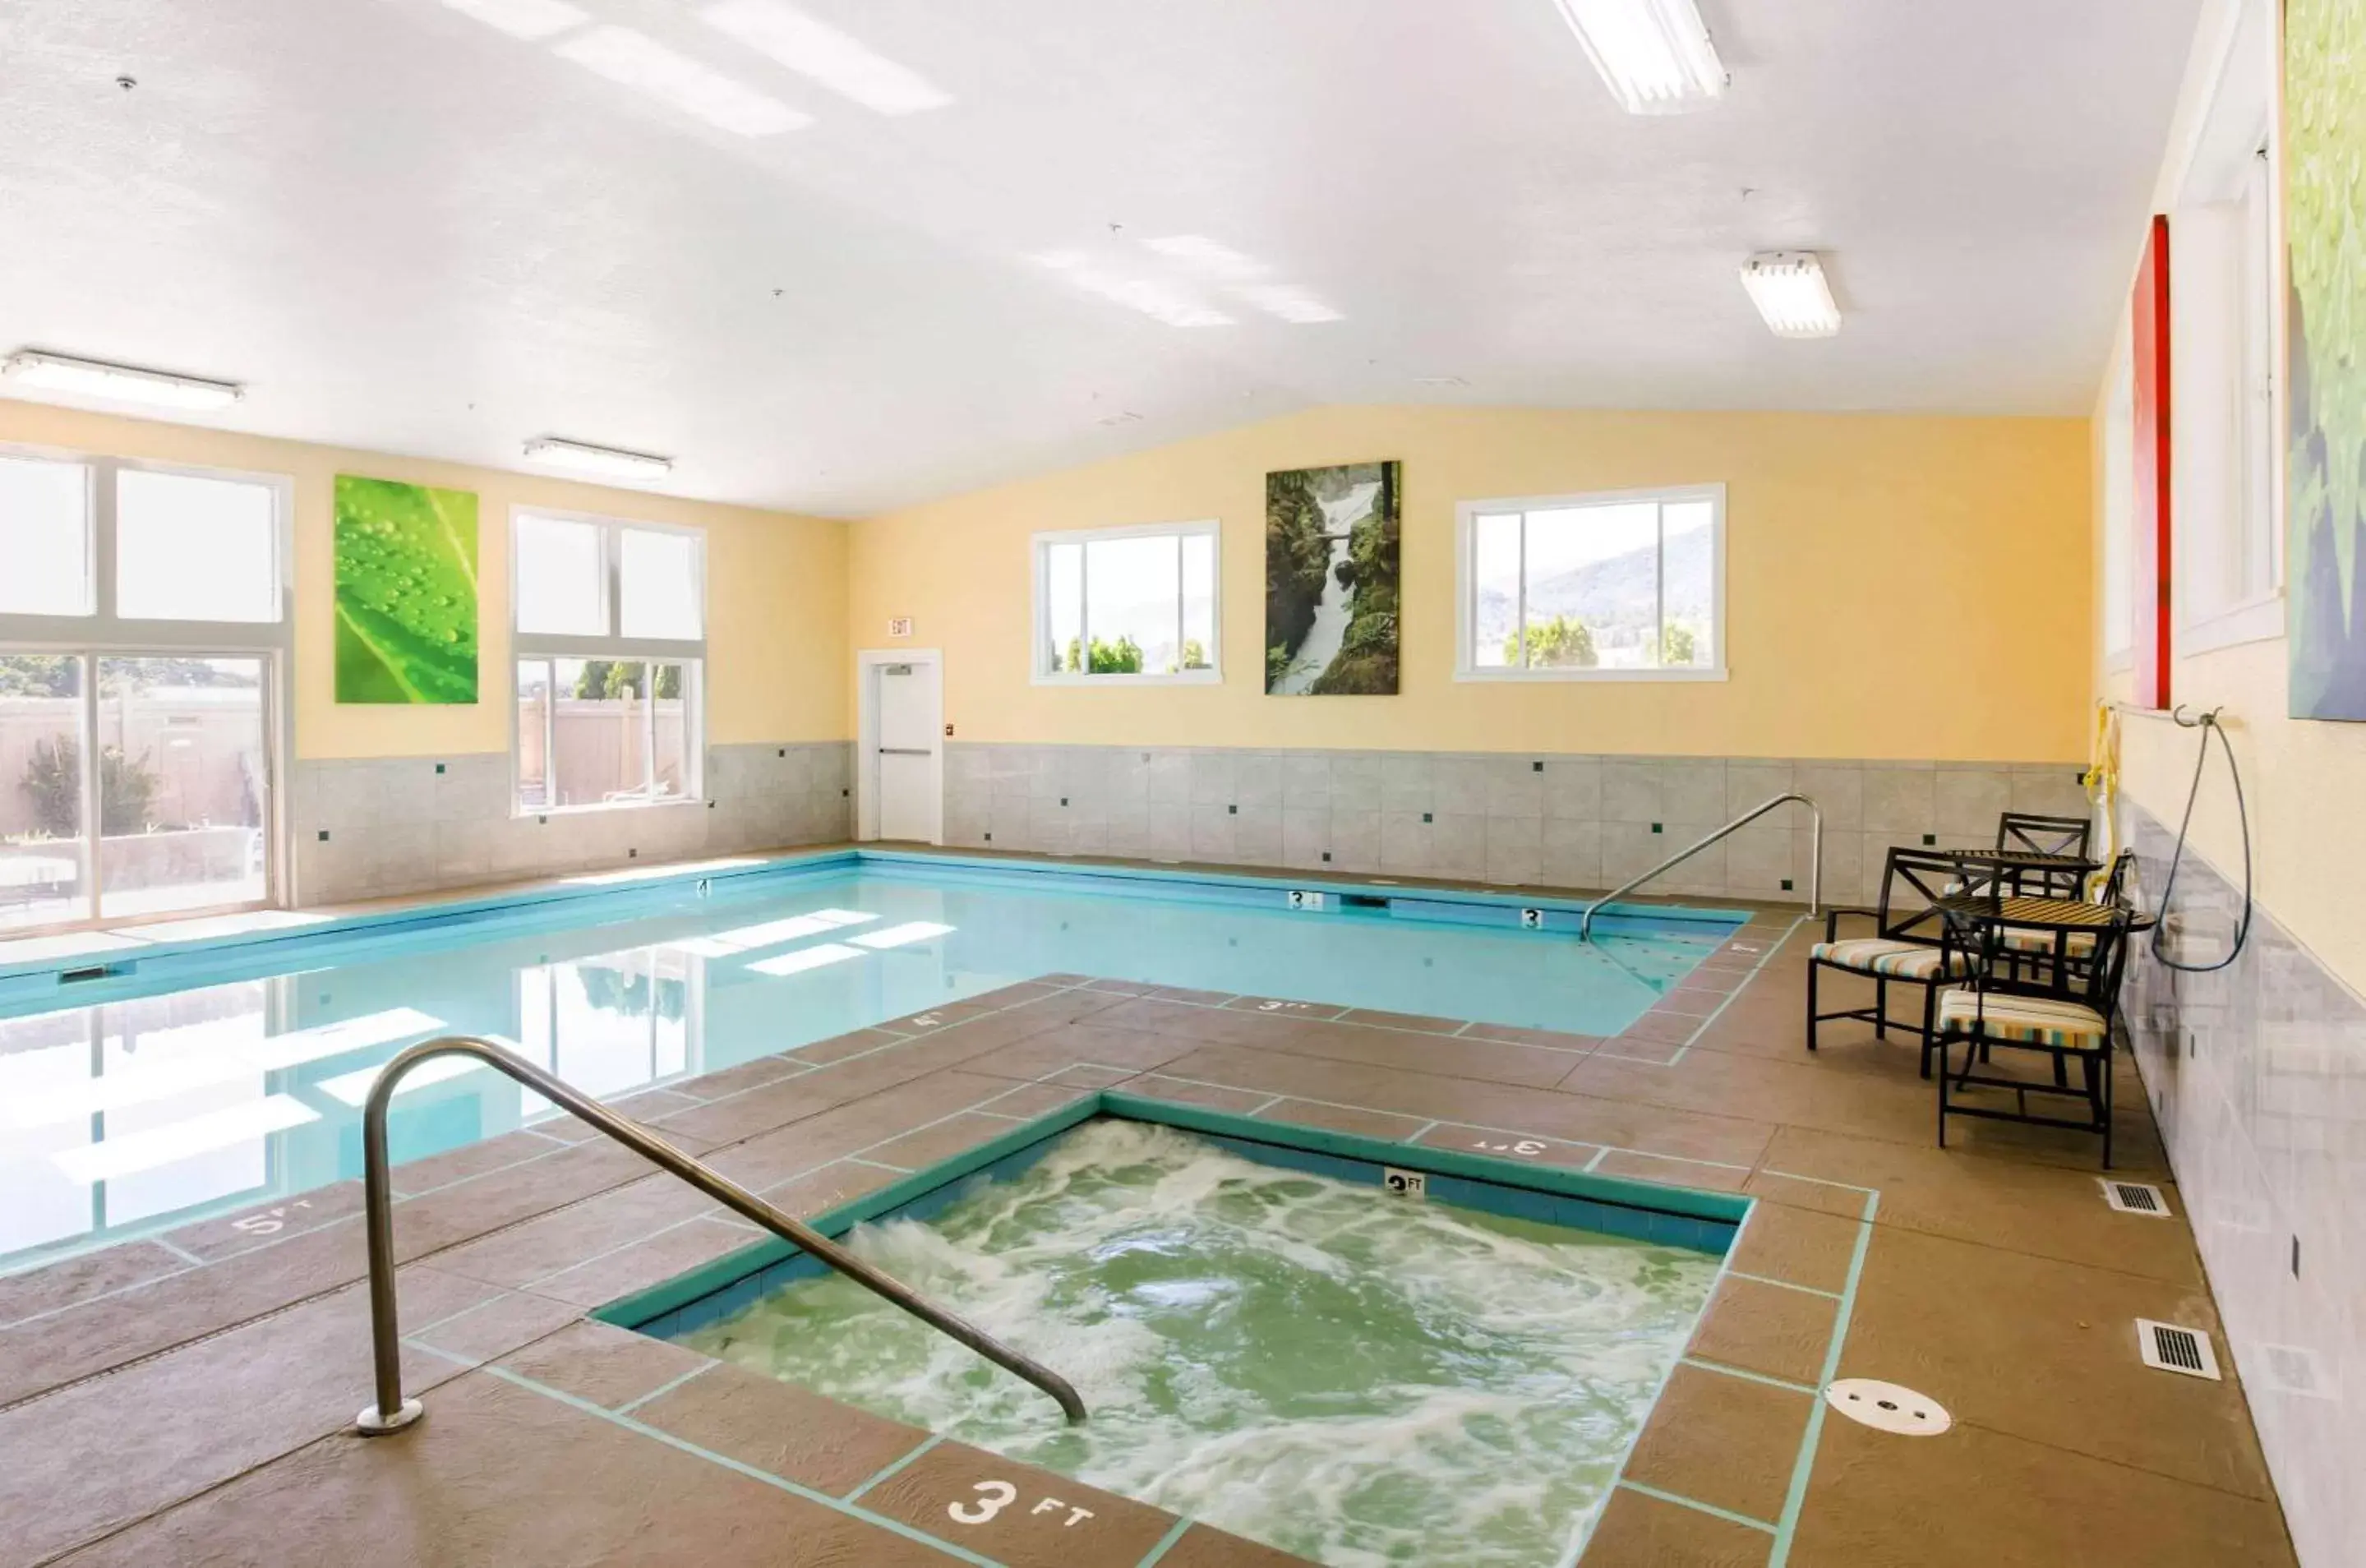 On site, Swimming Pool in Comfort Inn & Suites Ashland